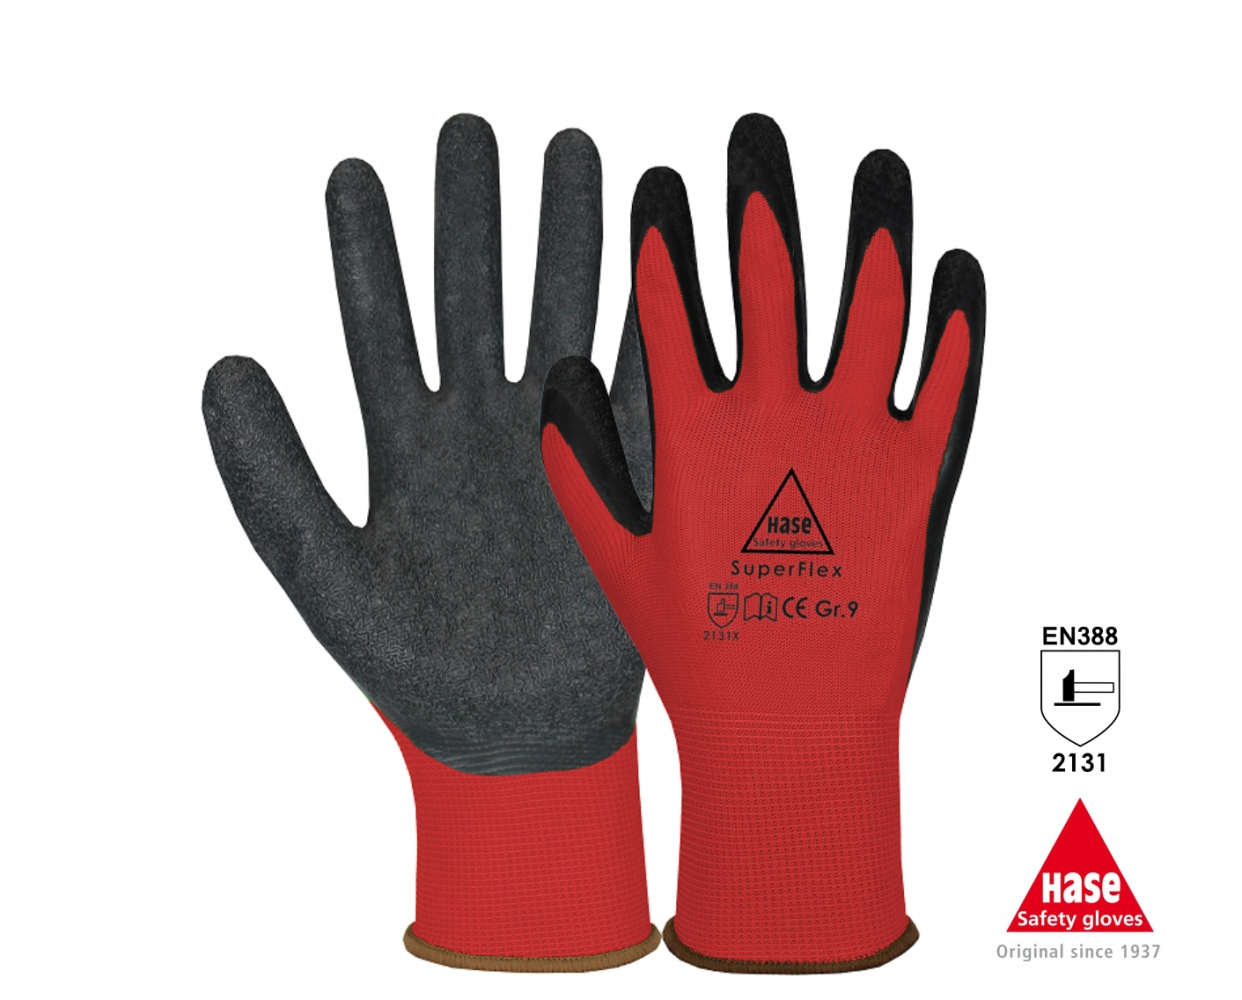 pics/hase-safety-gloves/hase-508610r-superflex-arbeitshandschuhe-rot.jpg